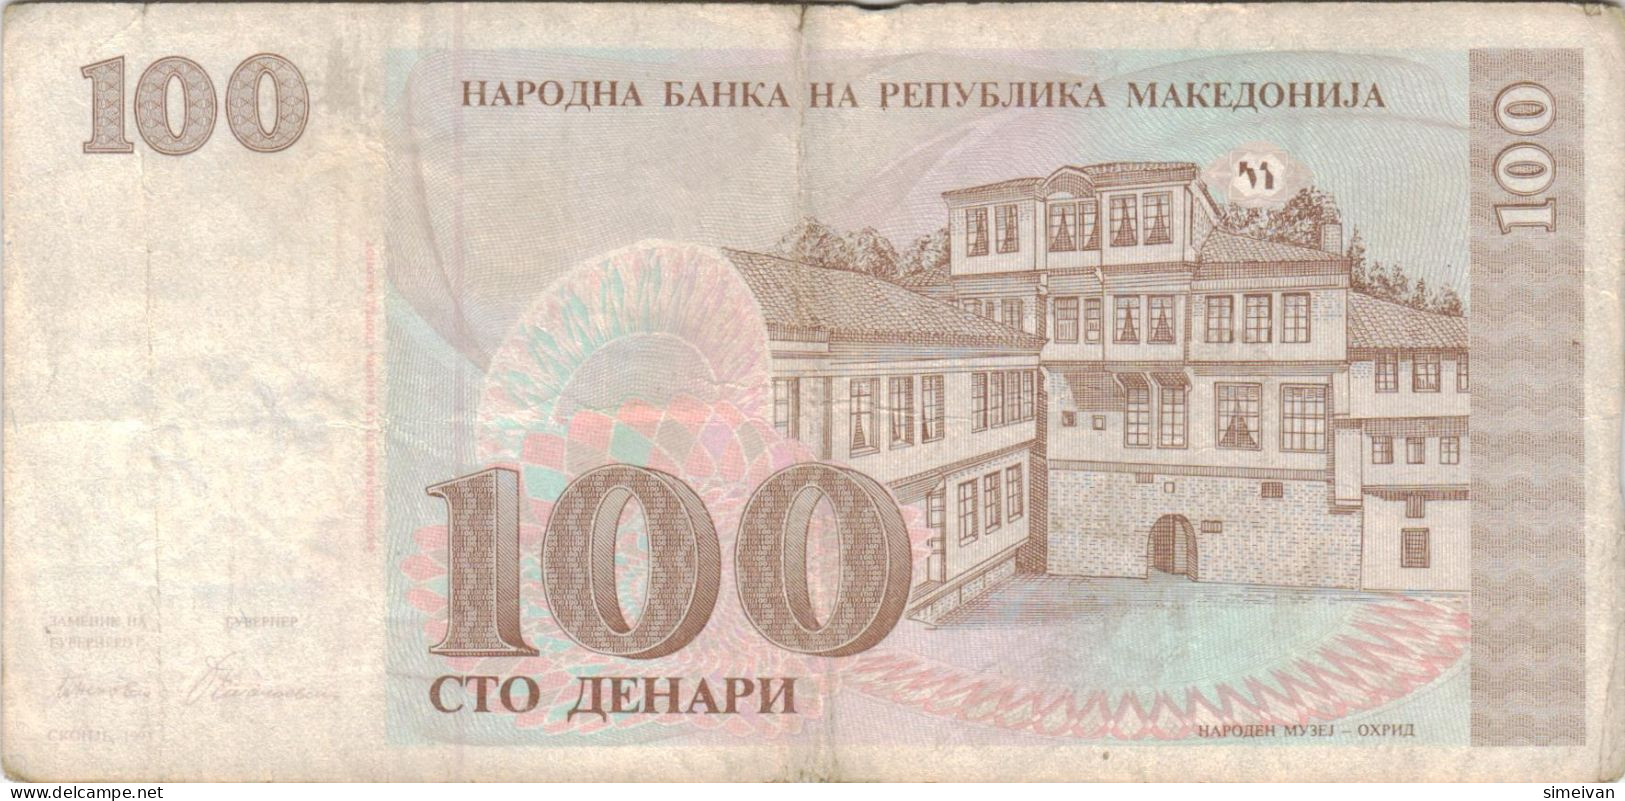 Macedonia 100 Denari 1993 P-12a Banknote Europe Currency Macédoine Mazedonien #5223 - North Macedonia